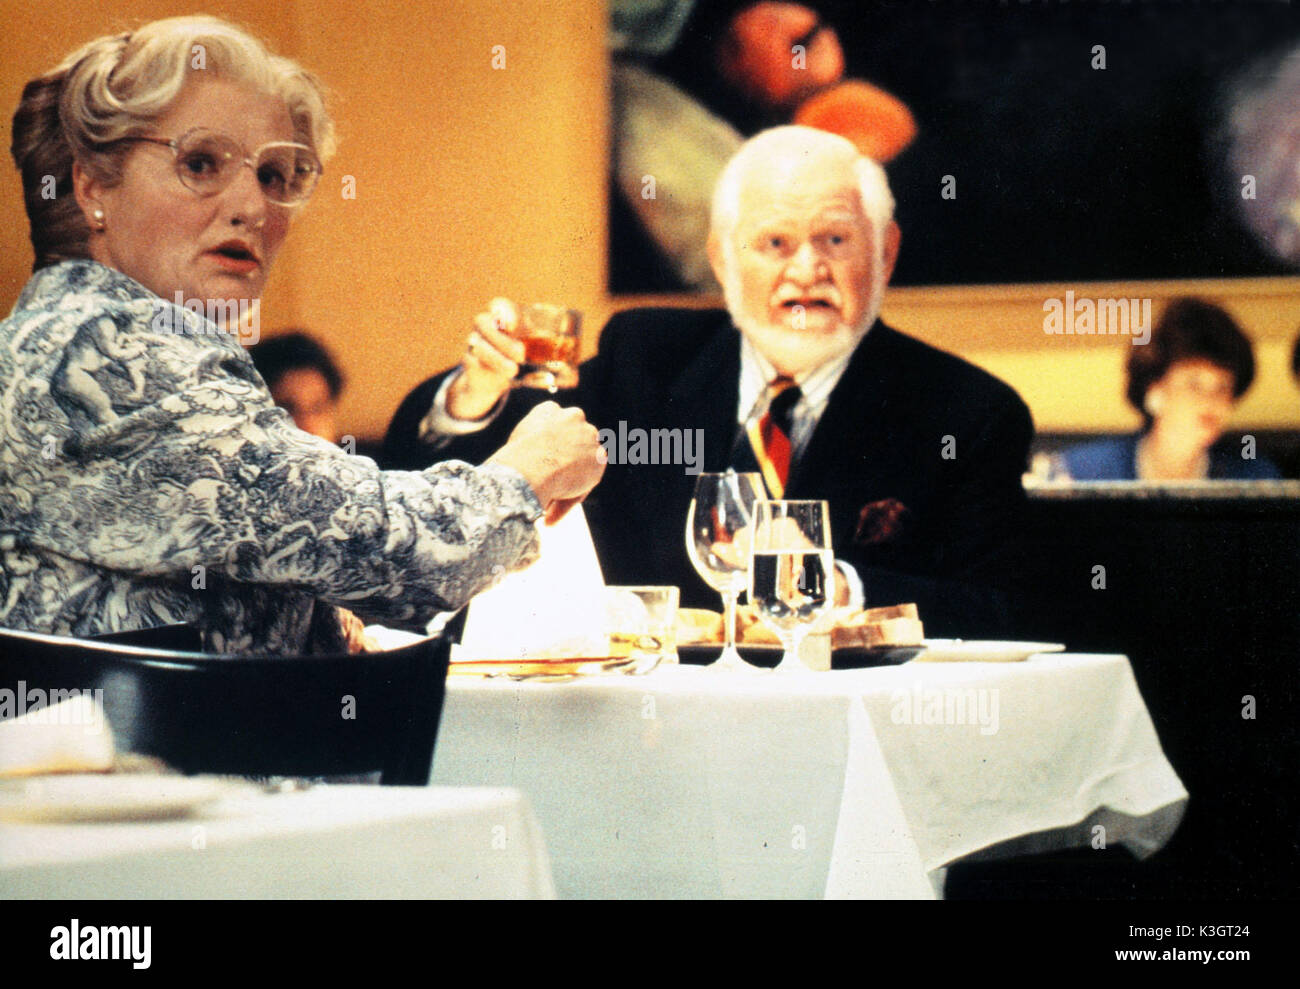 MRS DOUBTFIRE ROBIN WILLIAMS, ROBERT PROSKY Date: 1993 Stock Photo - Alamy